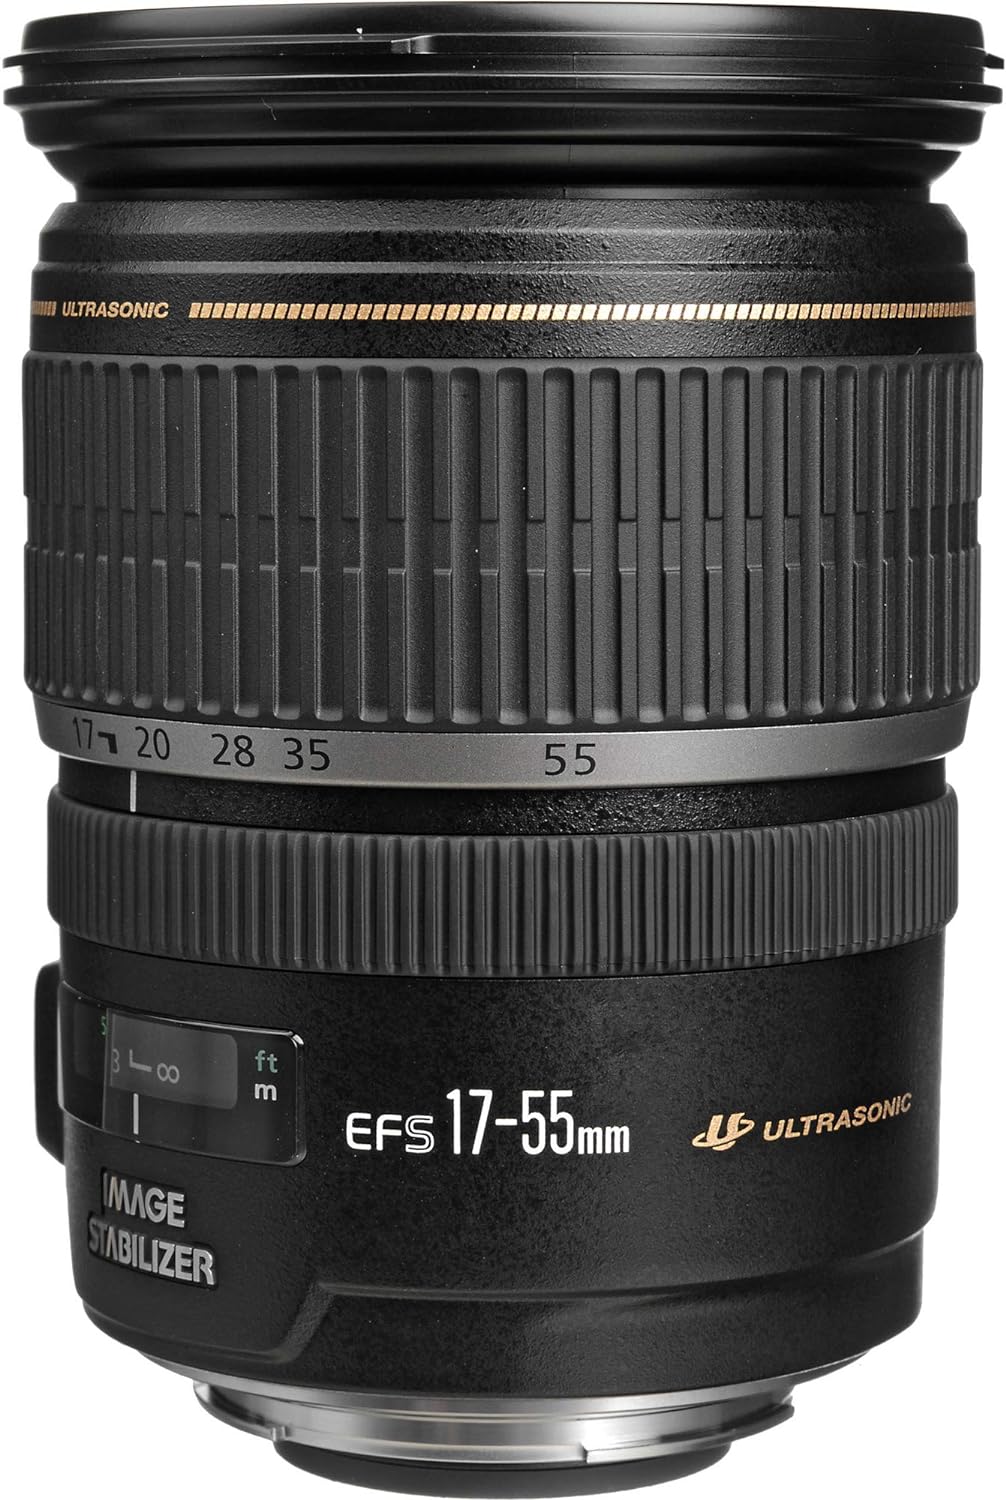 Understanding Image Stabilization in Canon EF-S Lenses